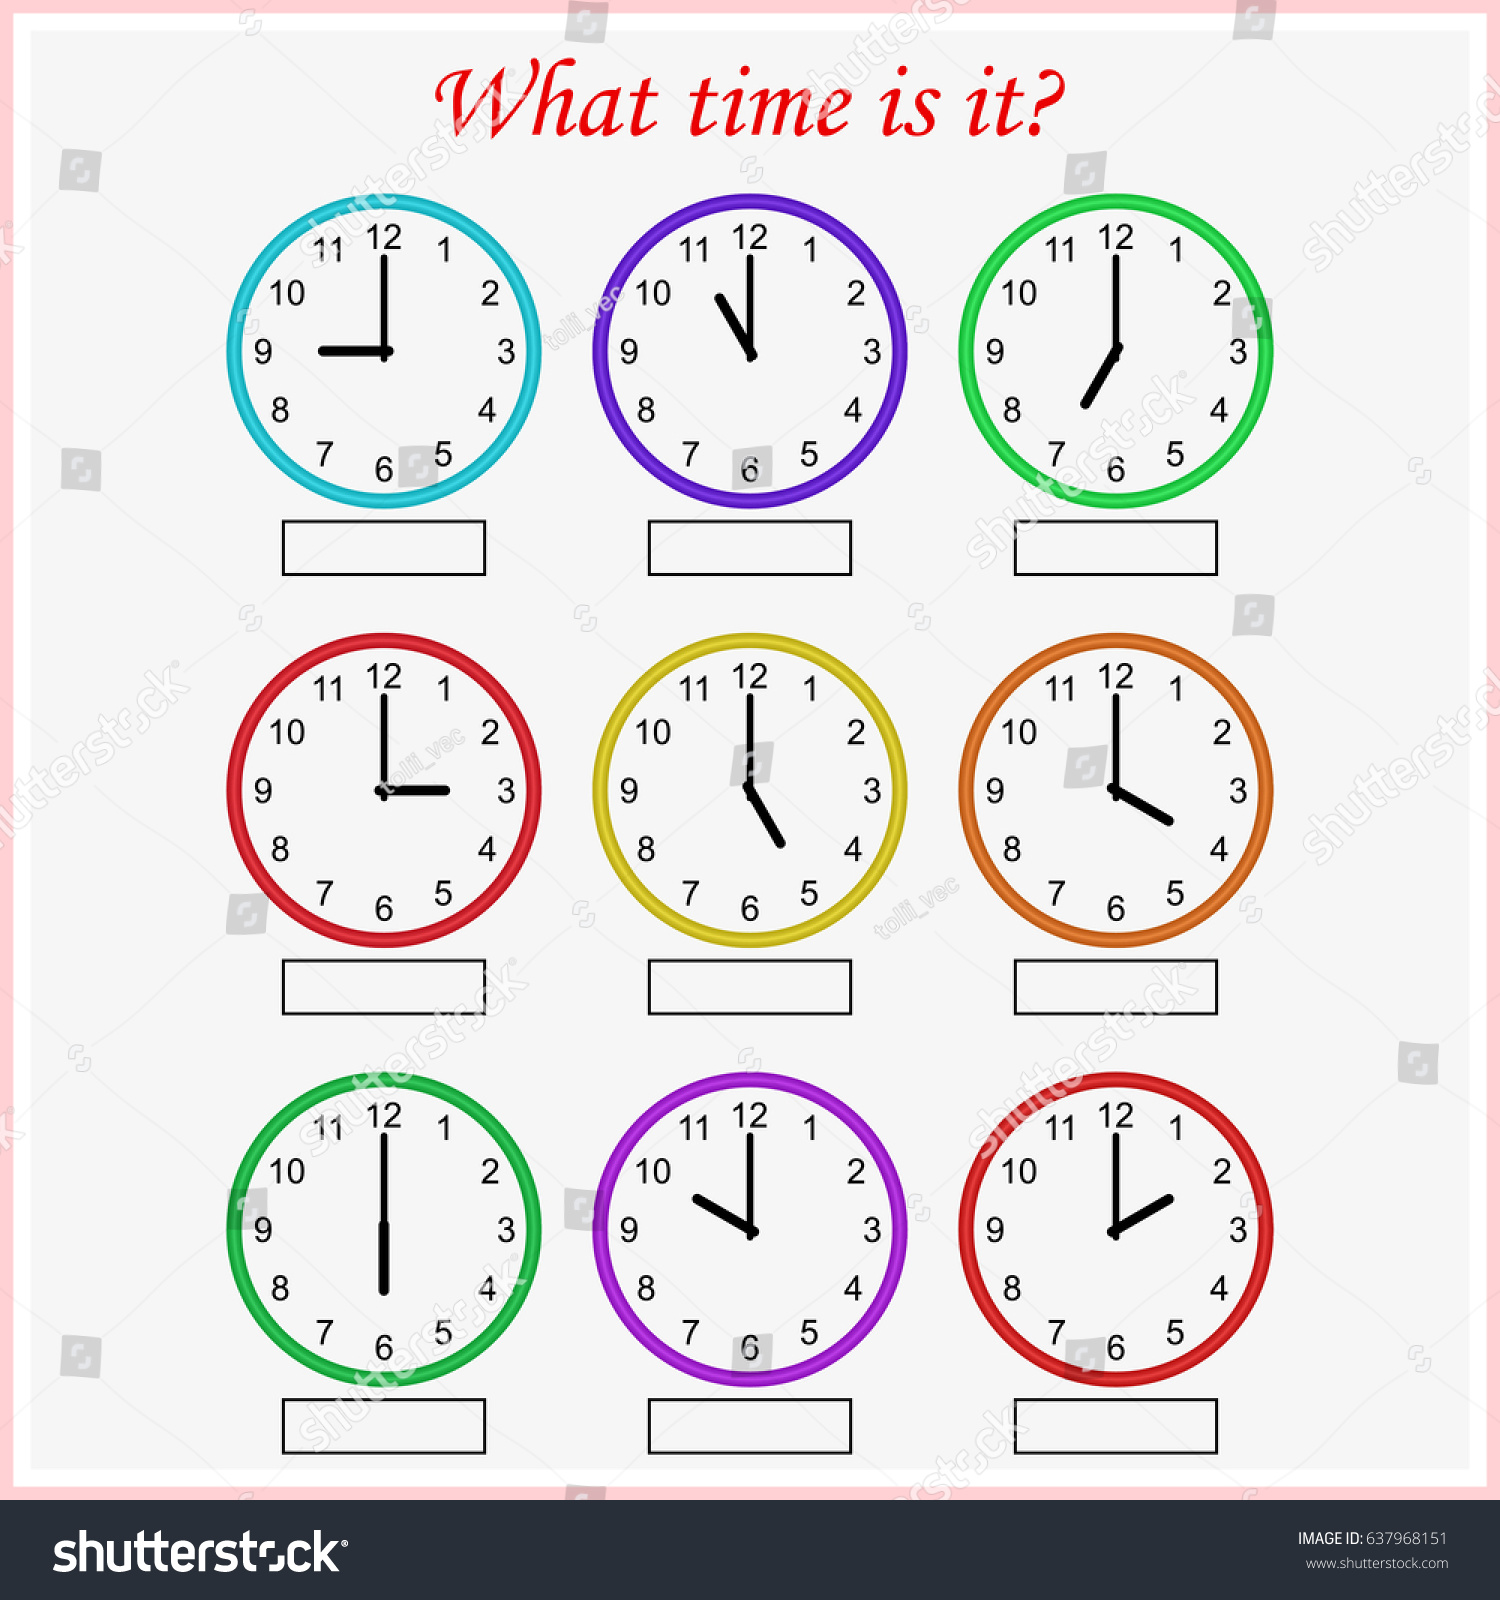 What time is it для детей